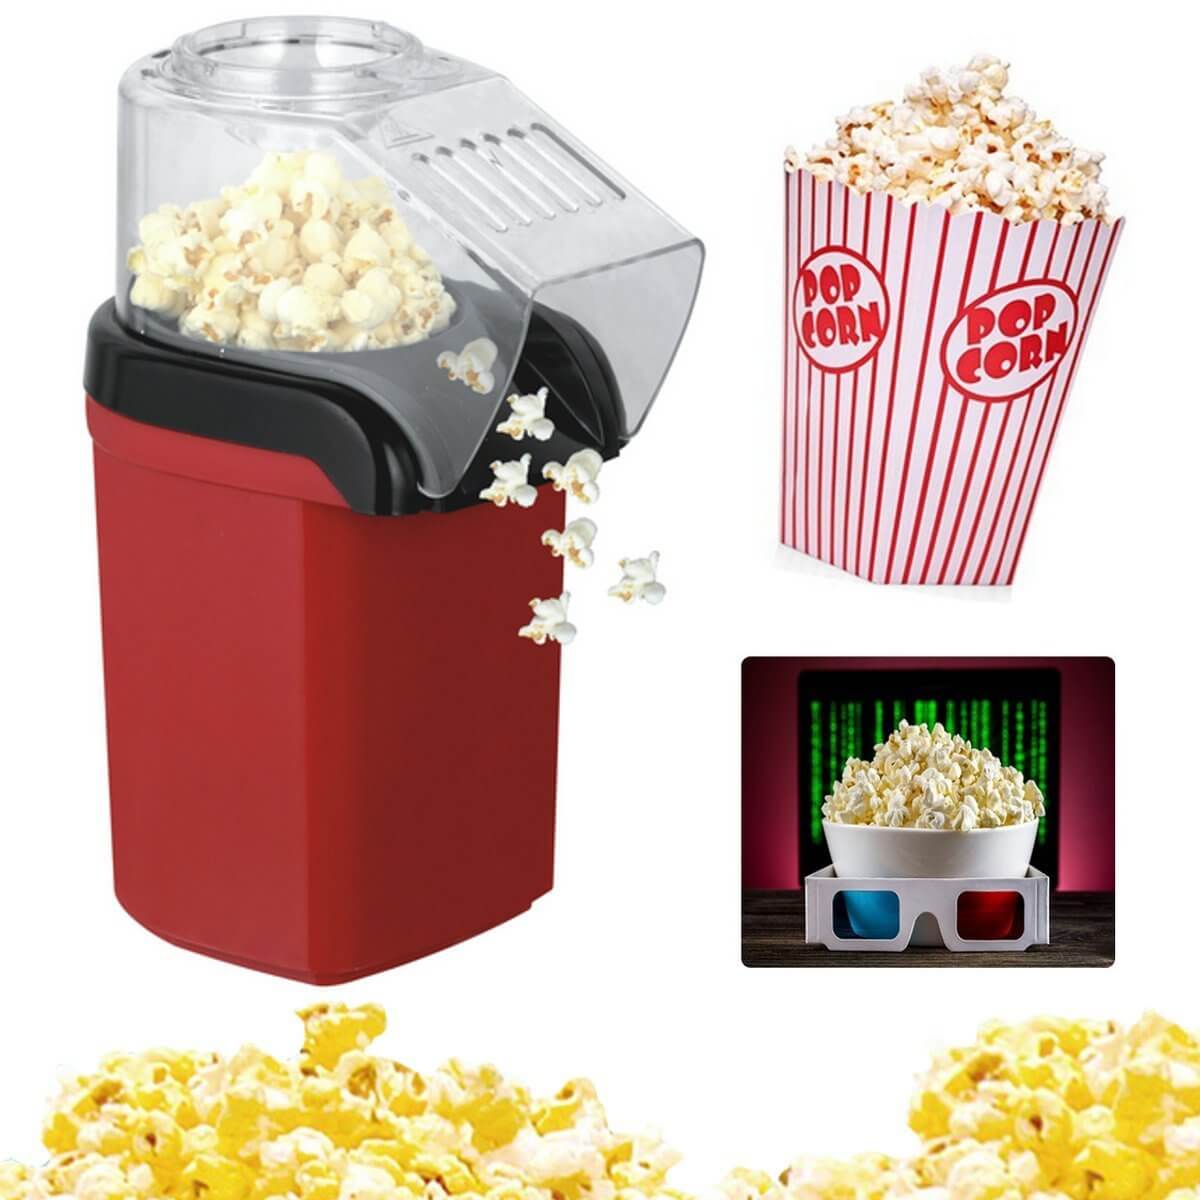 Electric Corn Popcorn Maker Diy Household Automatic Mini Hot Air Popcorn Making Kitchen Machine Diy Corn Popper 110V 220V